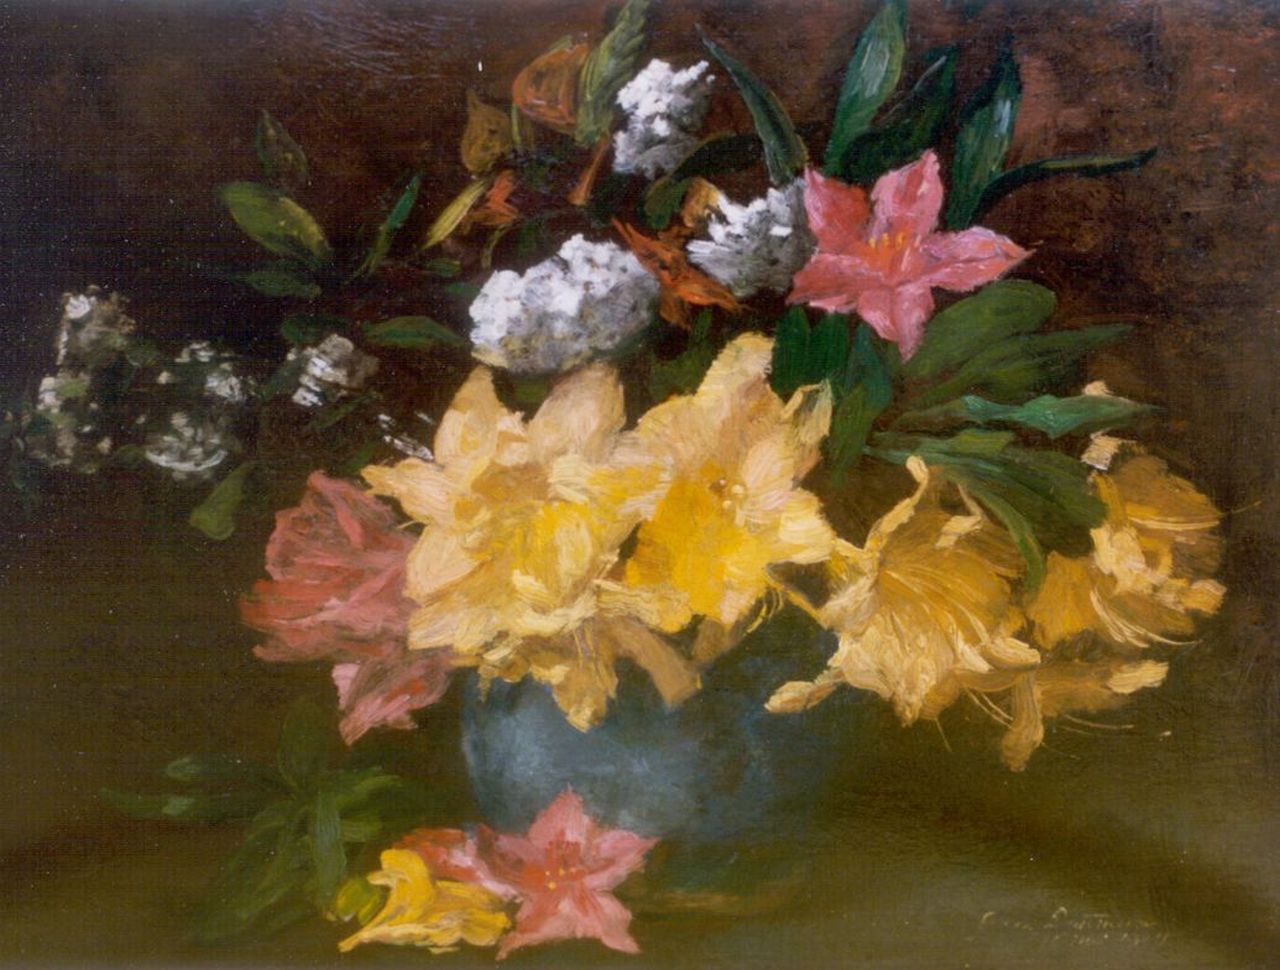 Deutmann F.W.M.  | 'Franz' Wilhelm Maria Deutmann, A flower still life, 26.8 x 35.0 cm, signed l.r. and dated 1914